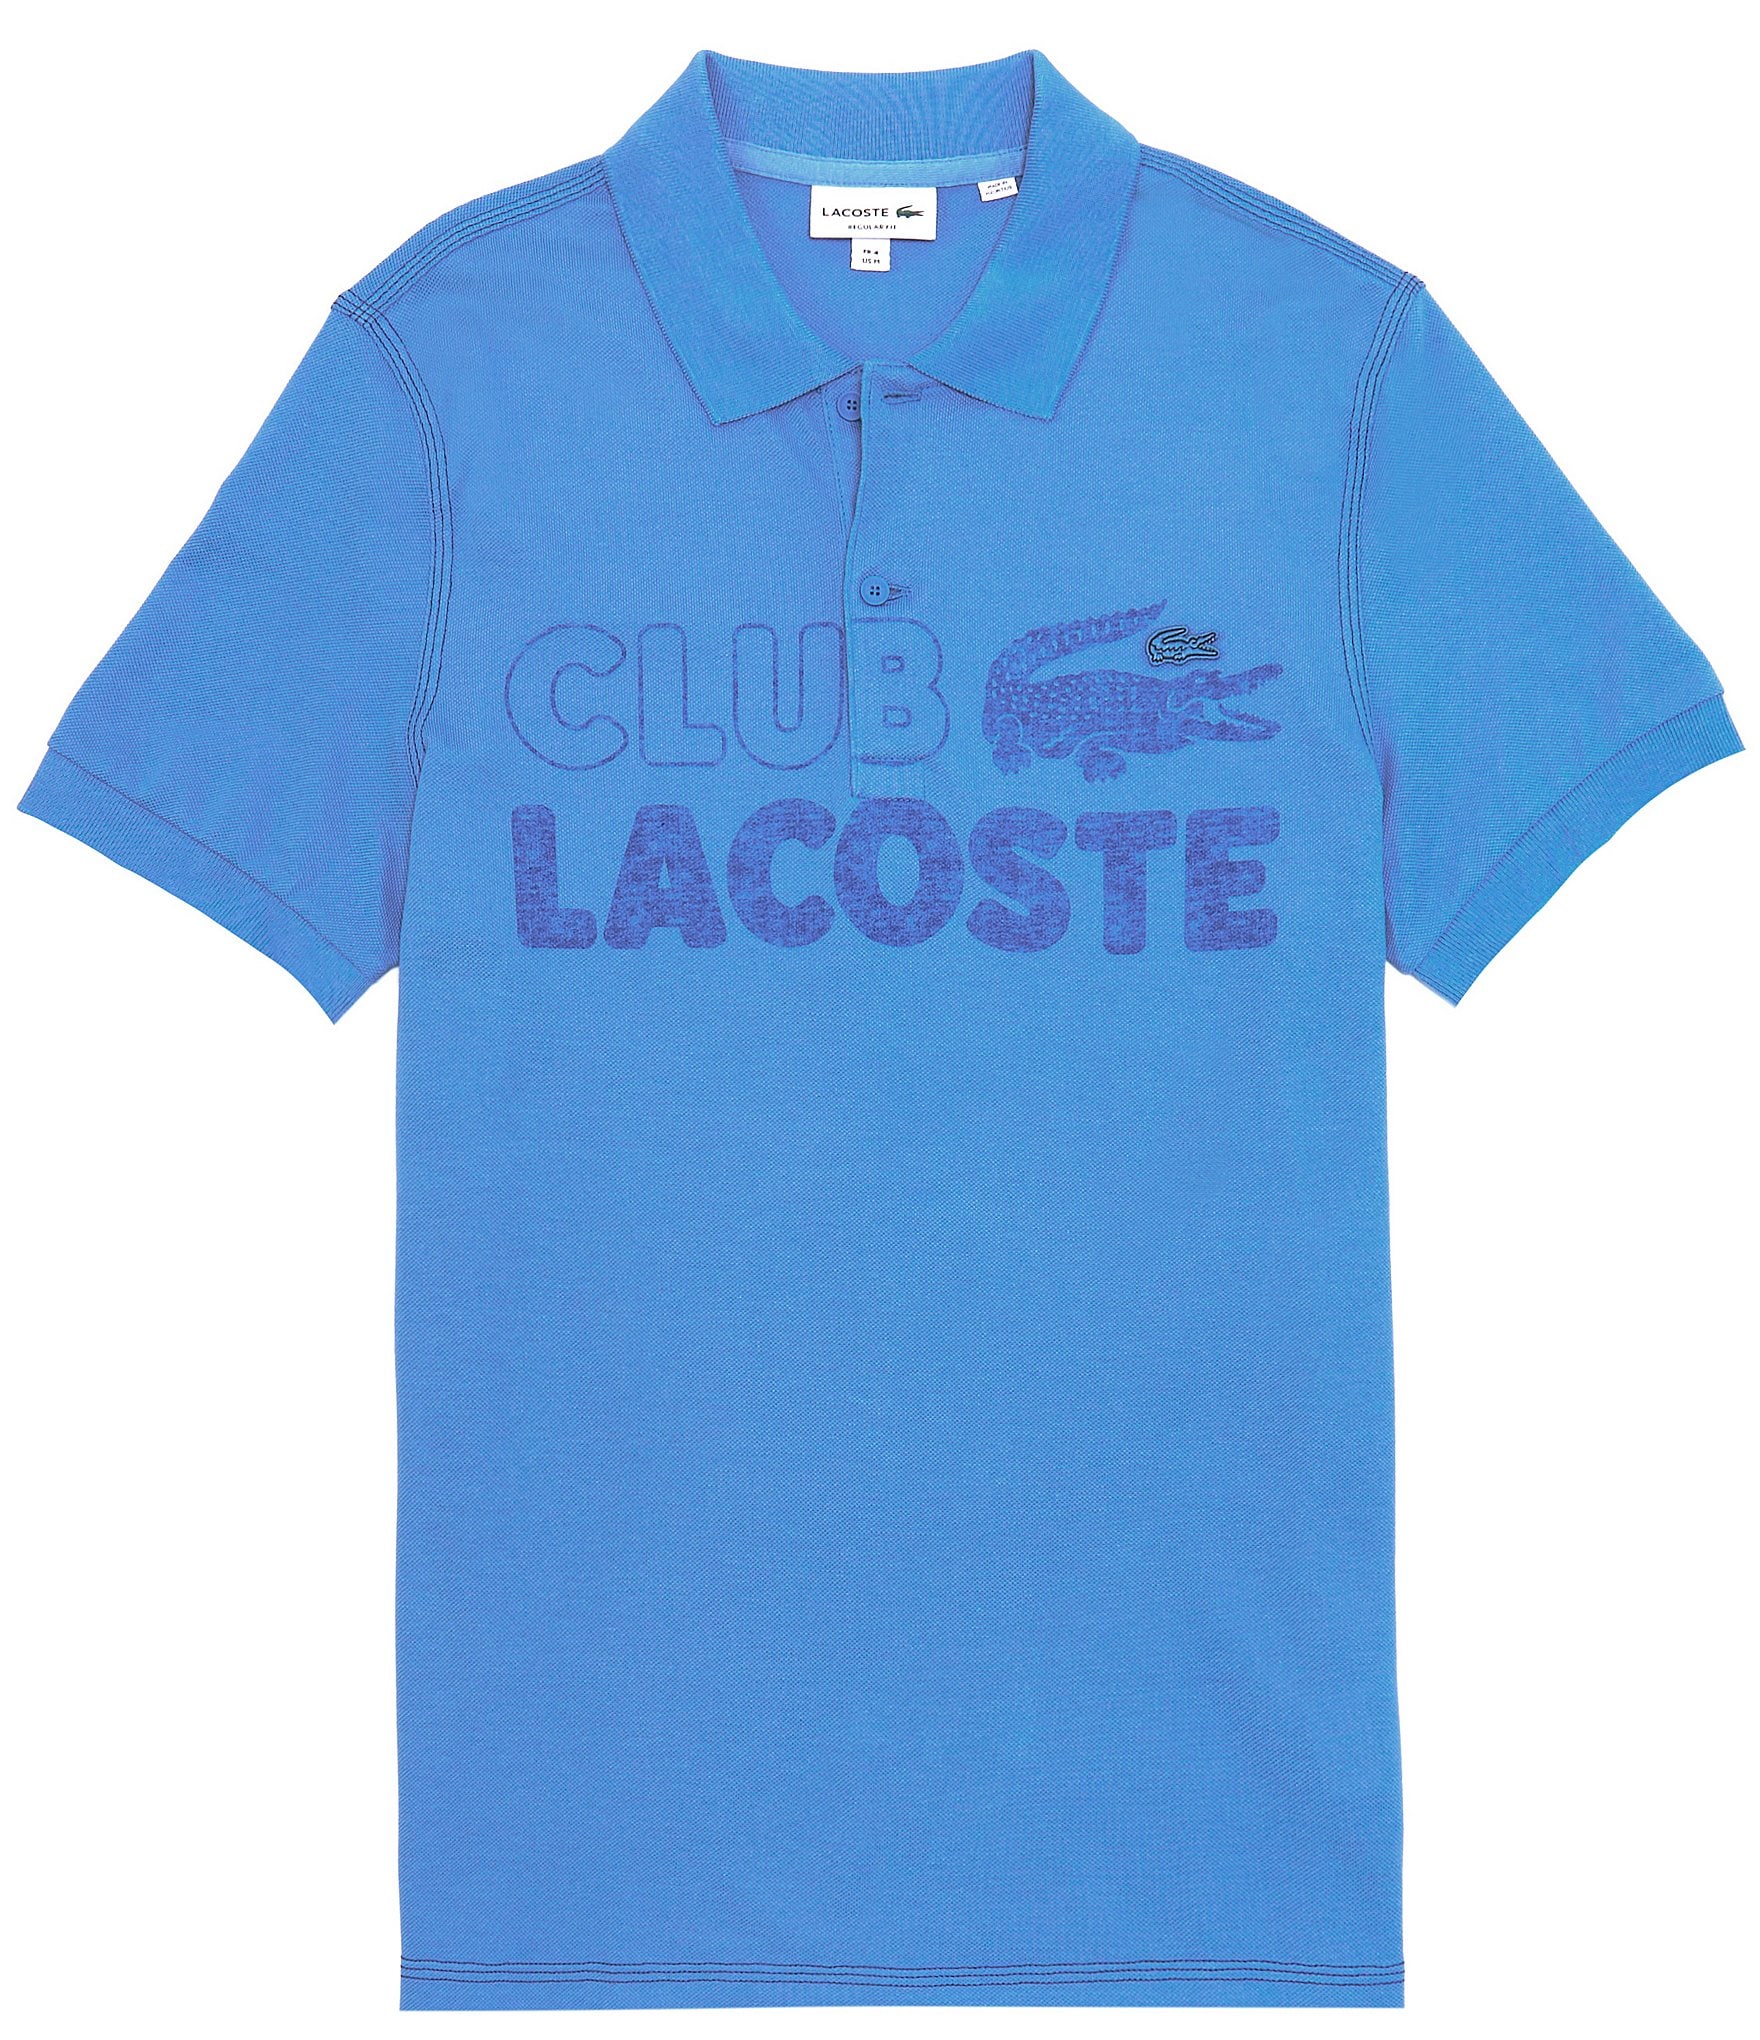 Original lacoste live polo shirt for men, Men's Fashion, Tops